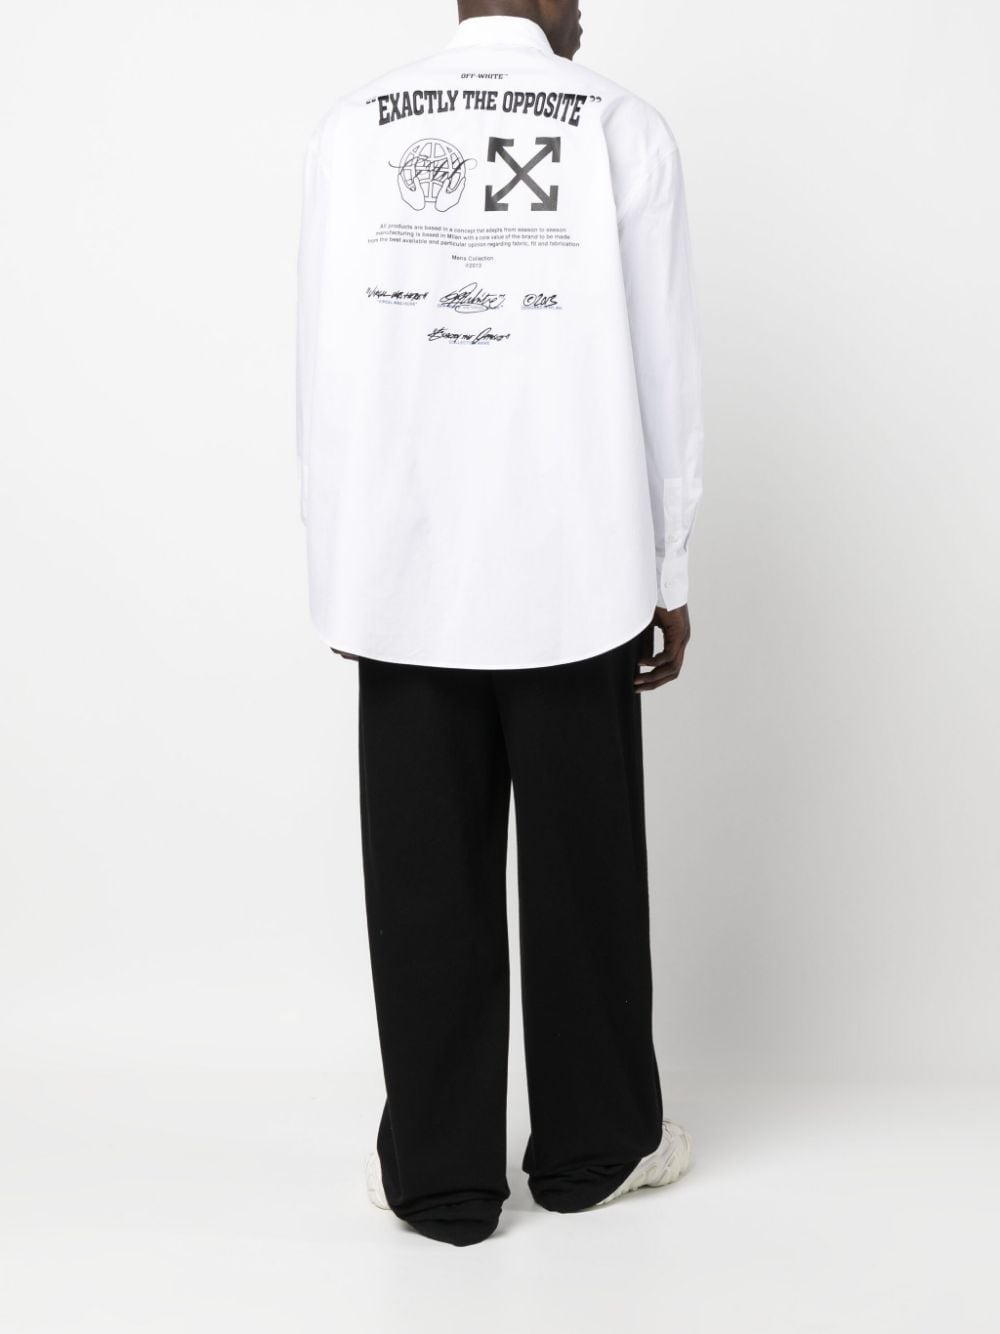 Exact Opp cotton shirt - 2